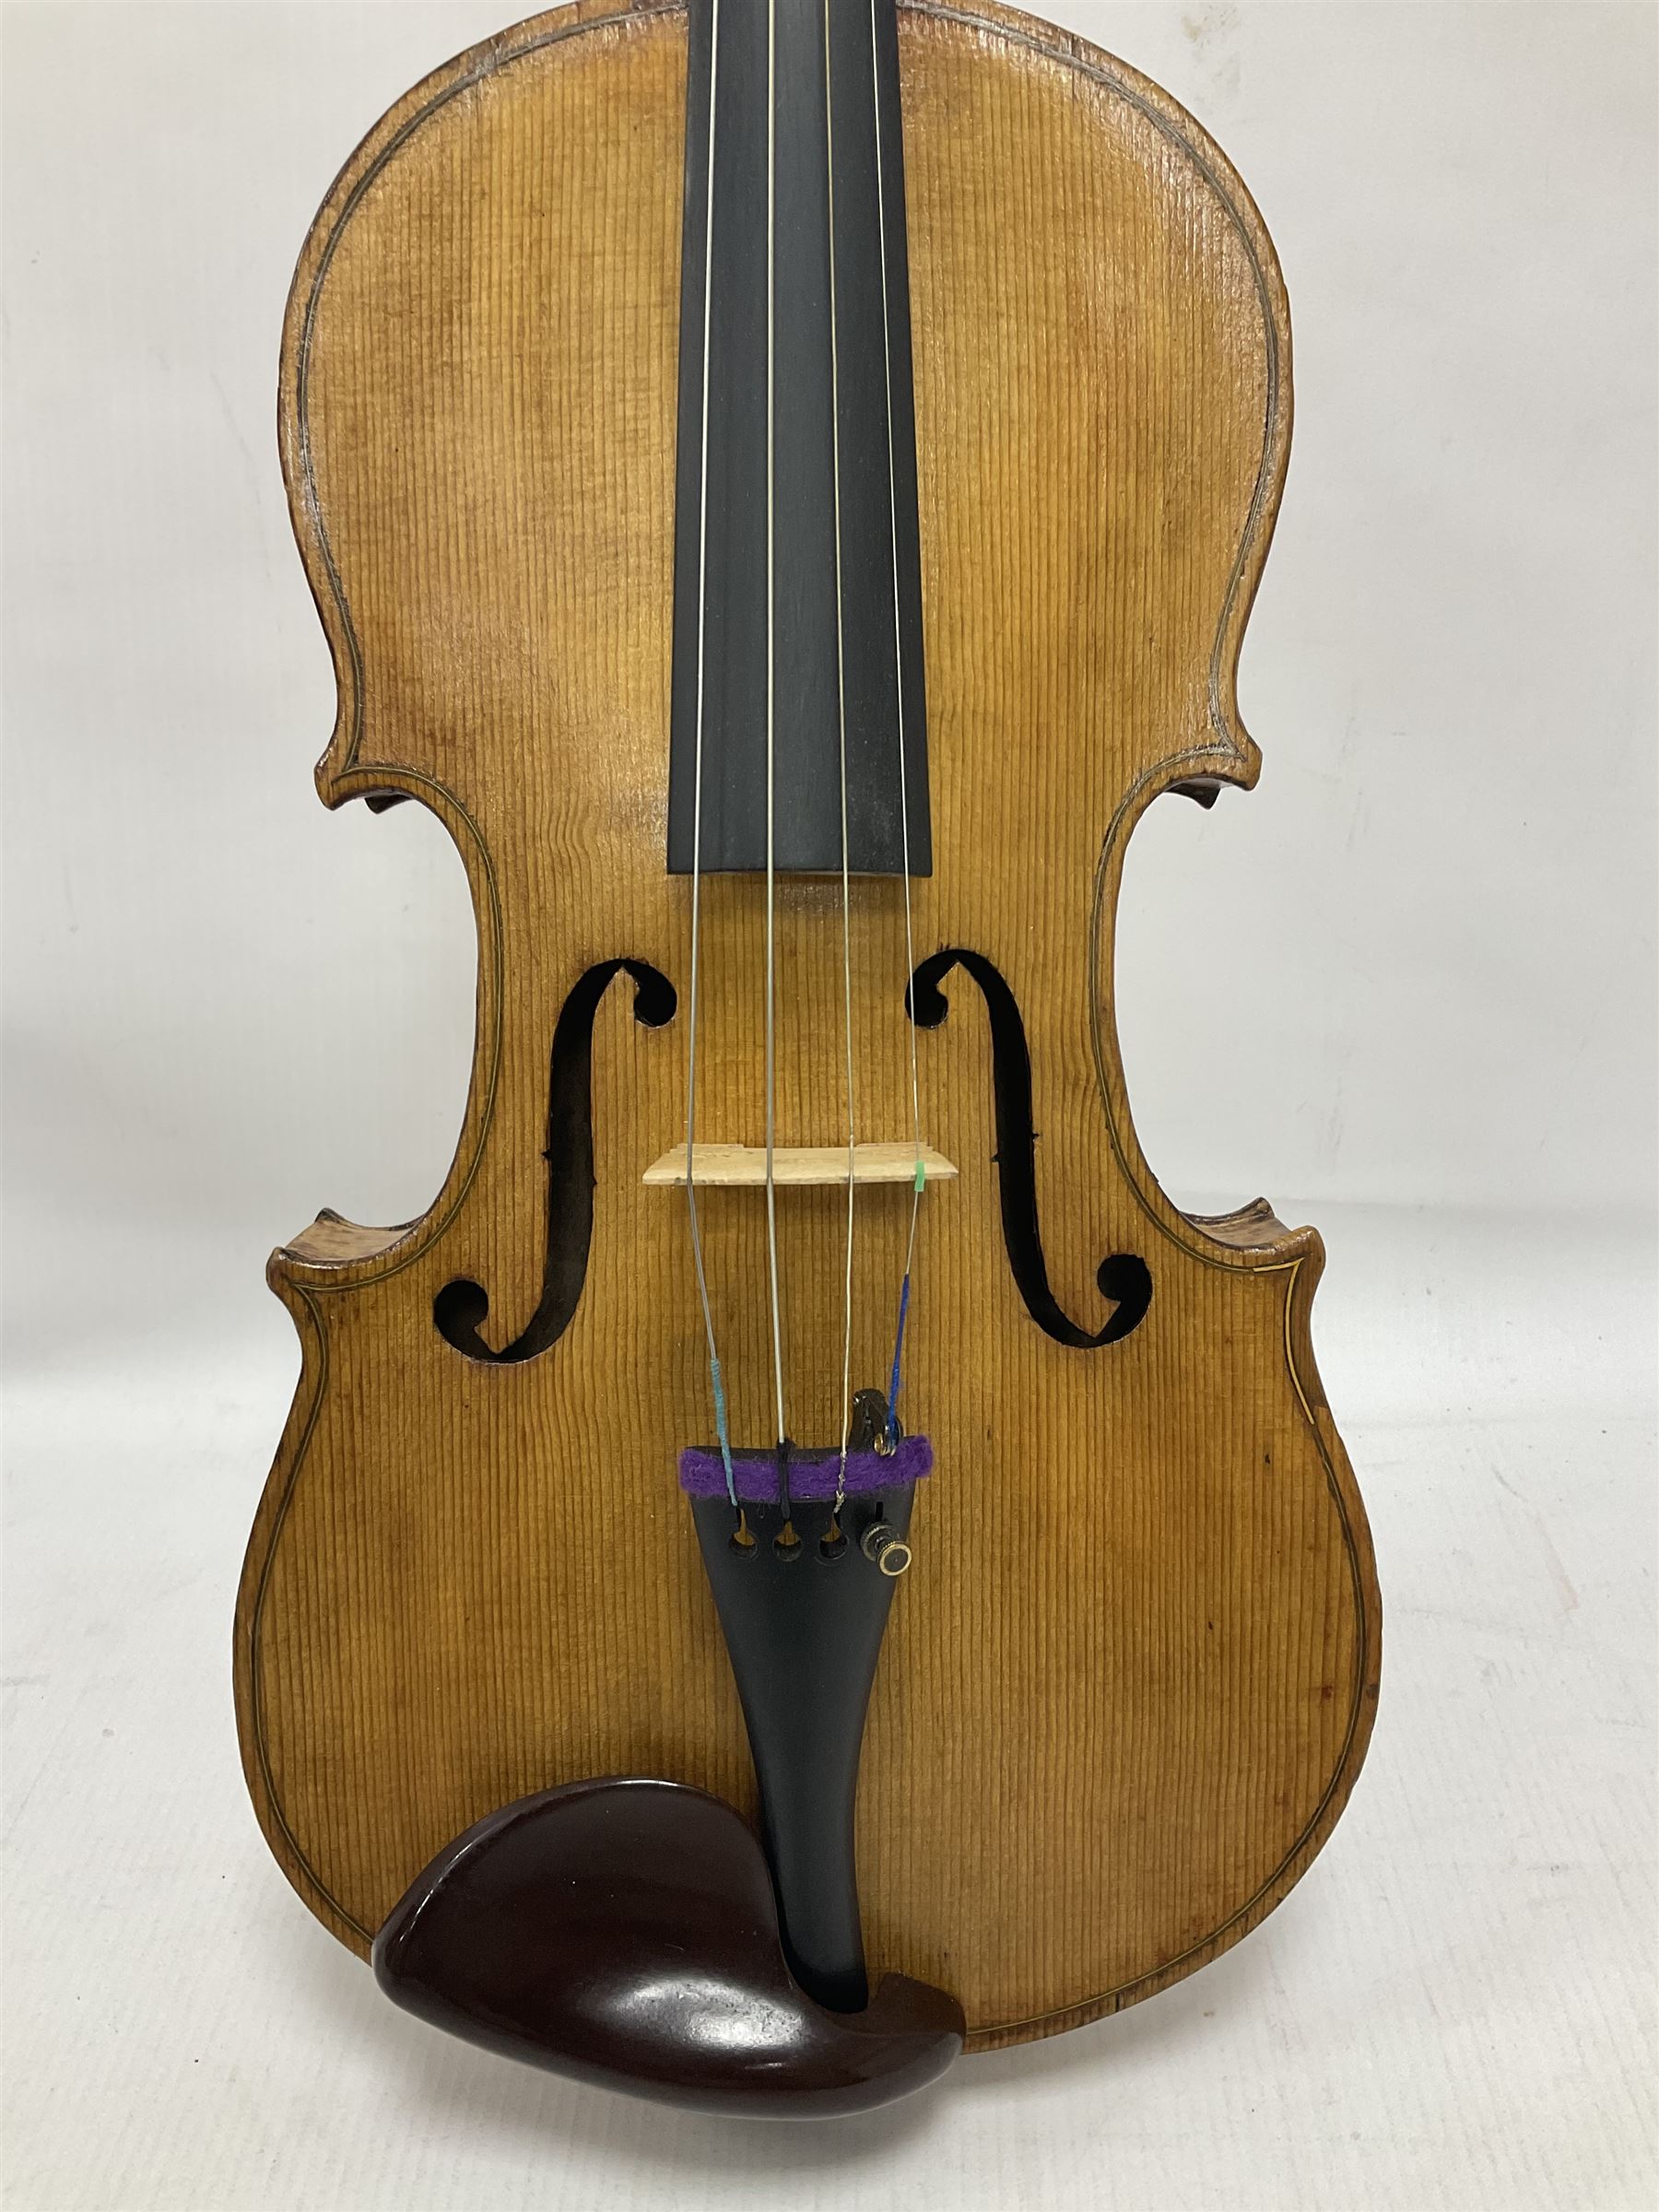 Copy of a full size Stradivarius violin - Image 2 of 12